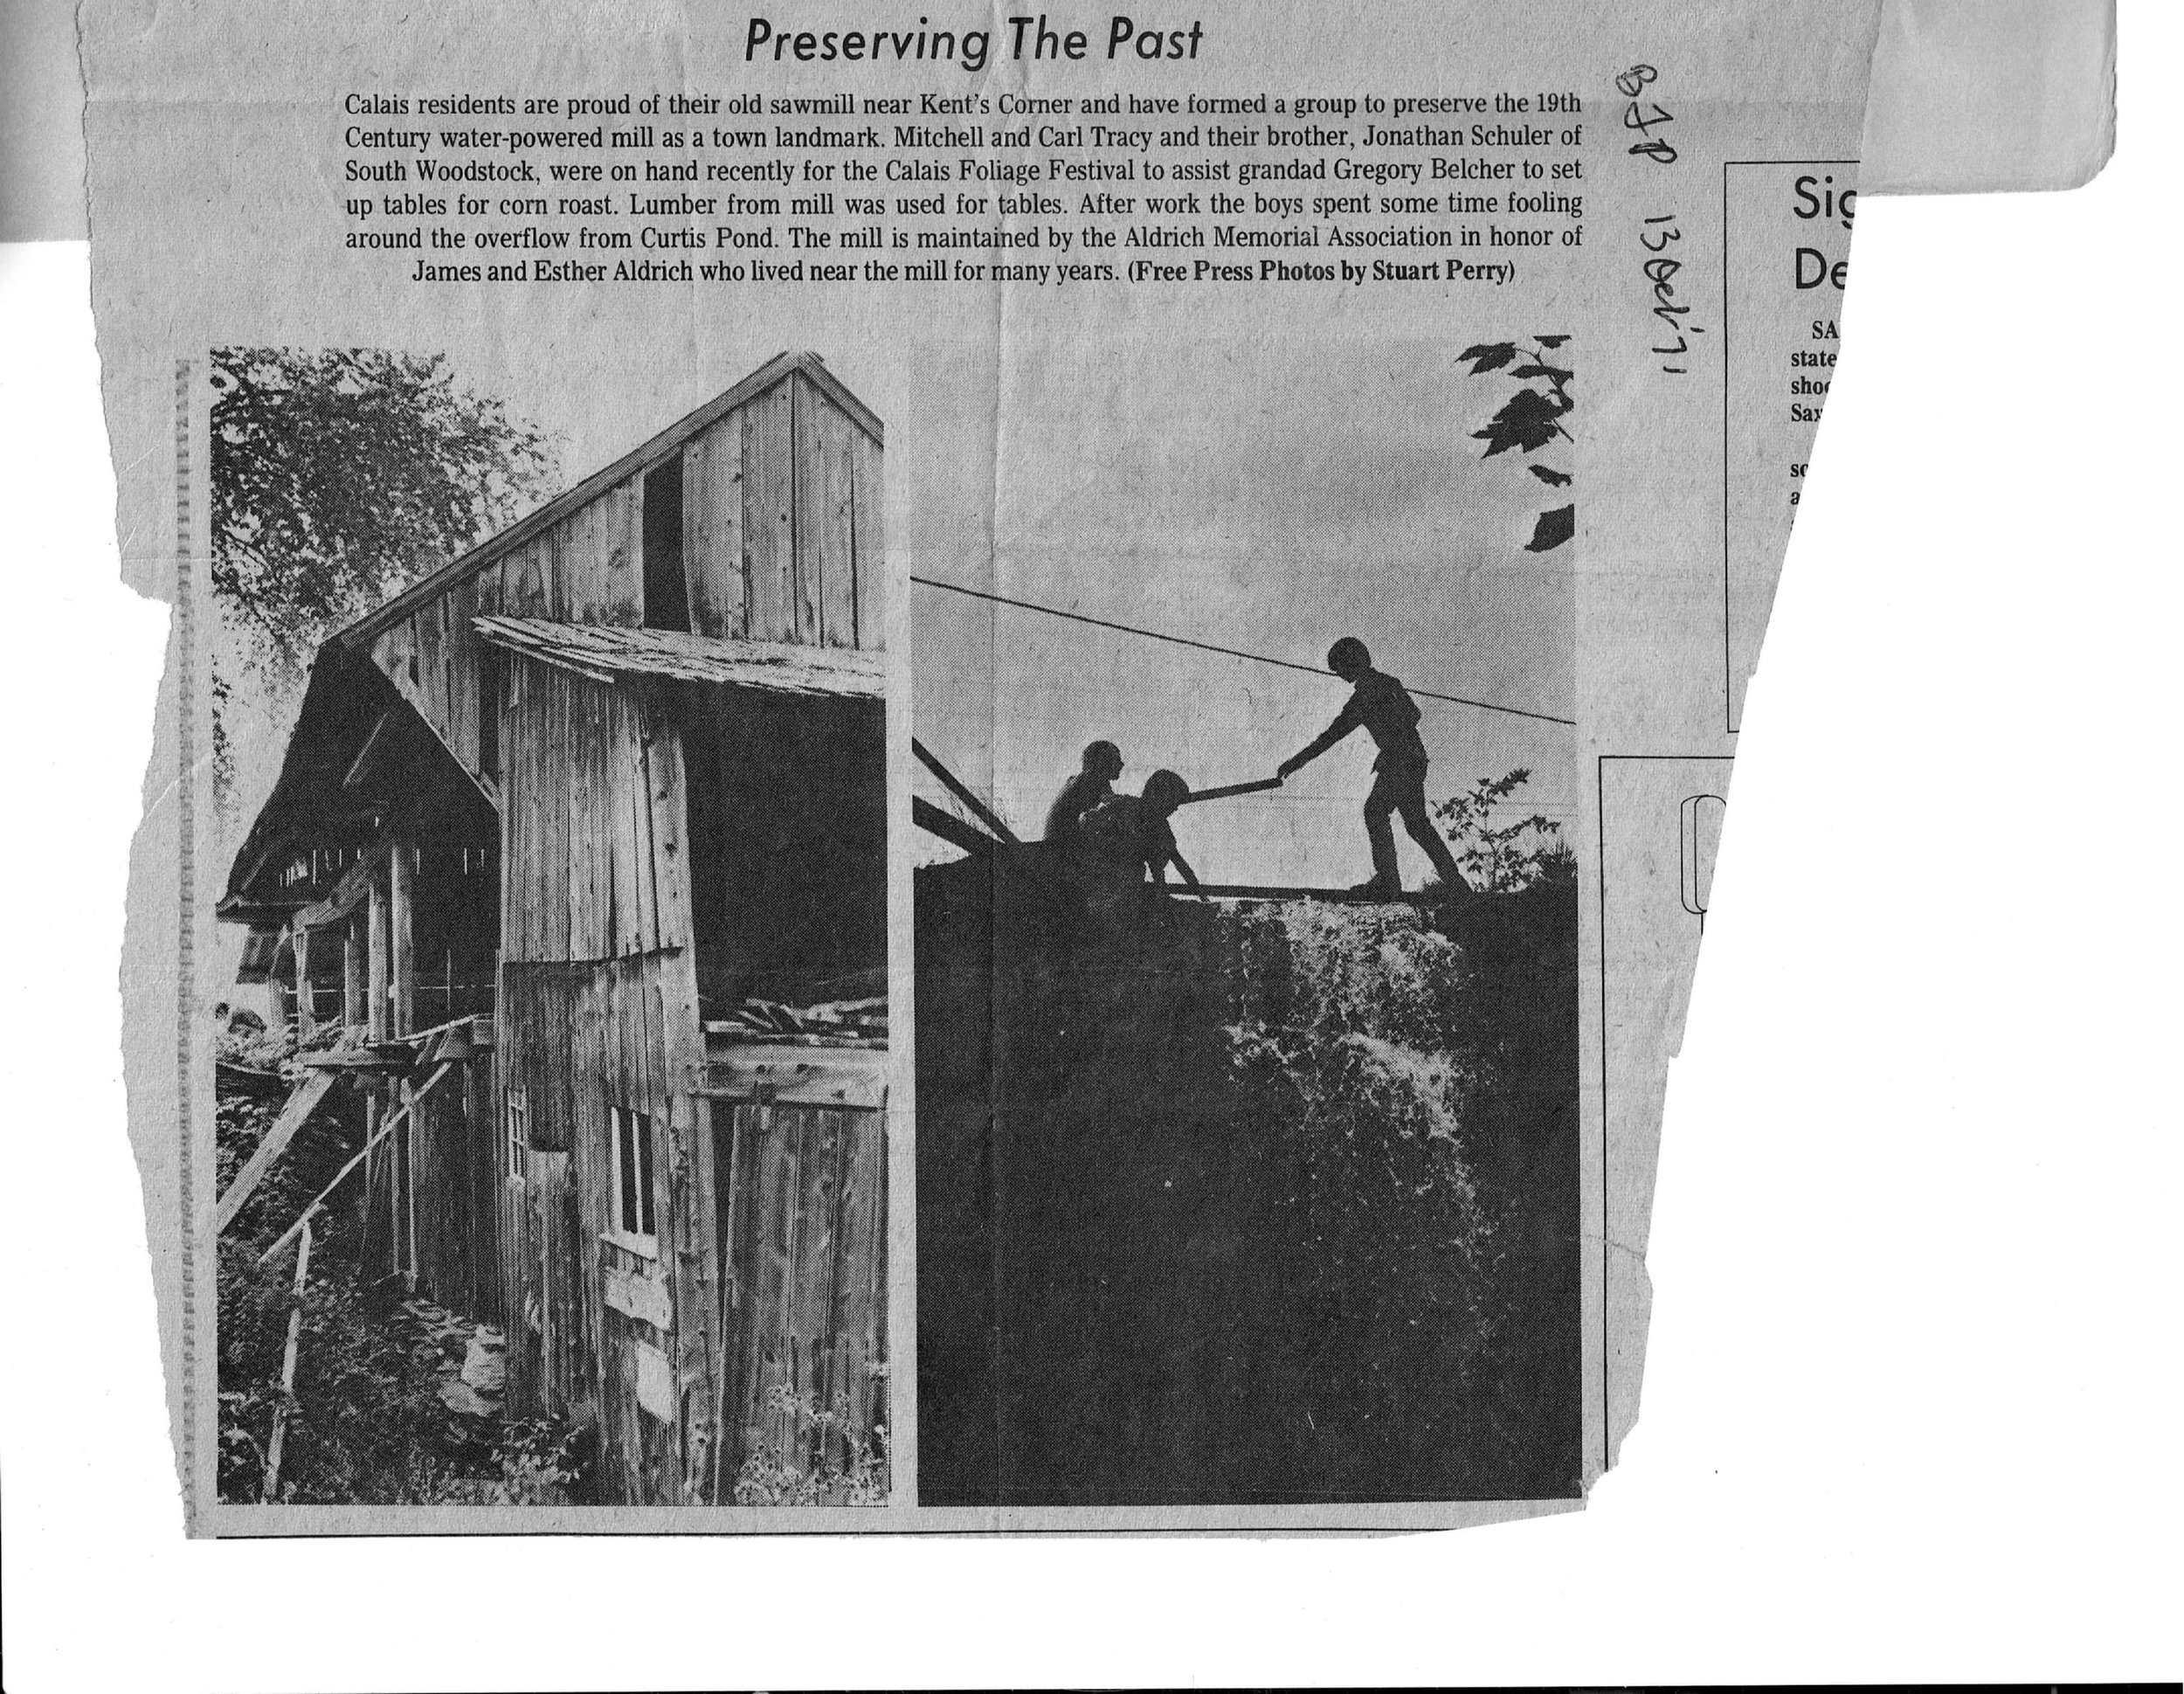 Burlington Free Press, October 13, 1971: 'Preserving the Past', Part 2